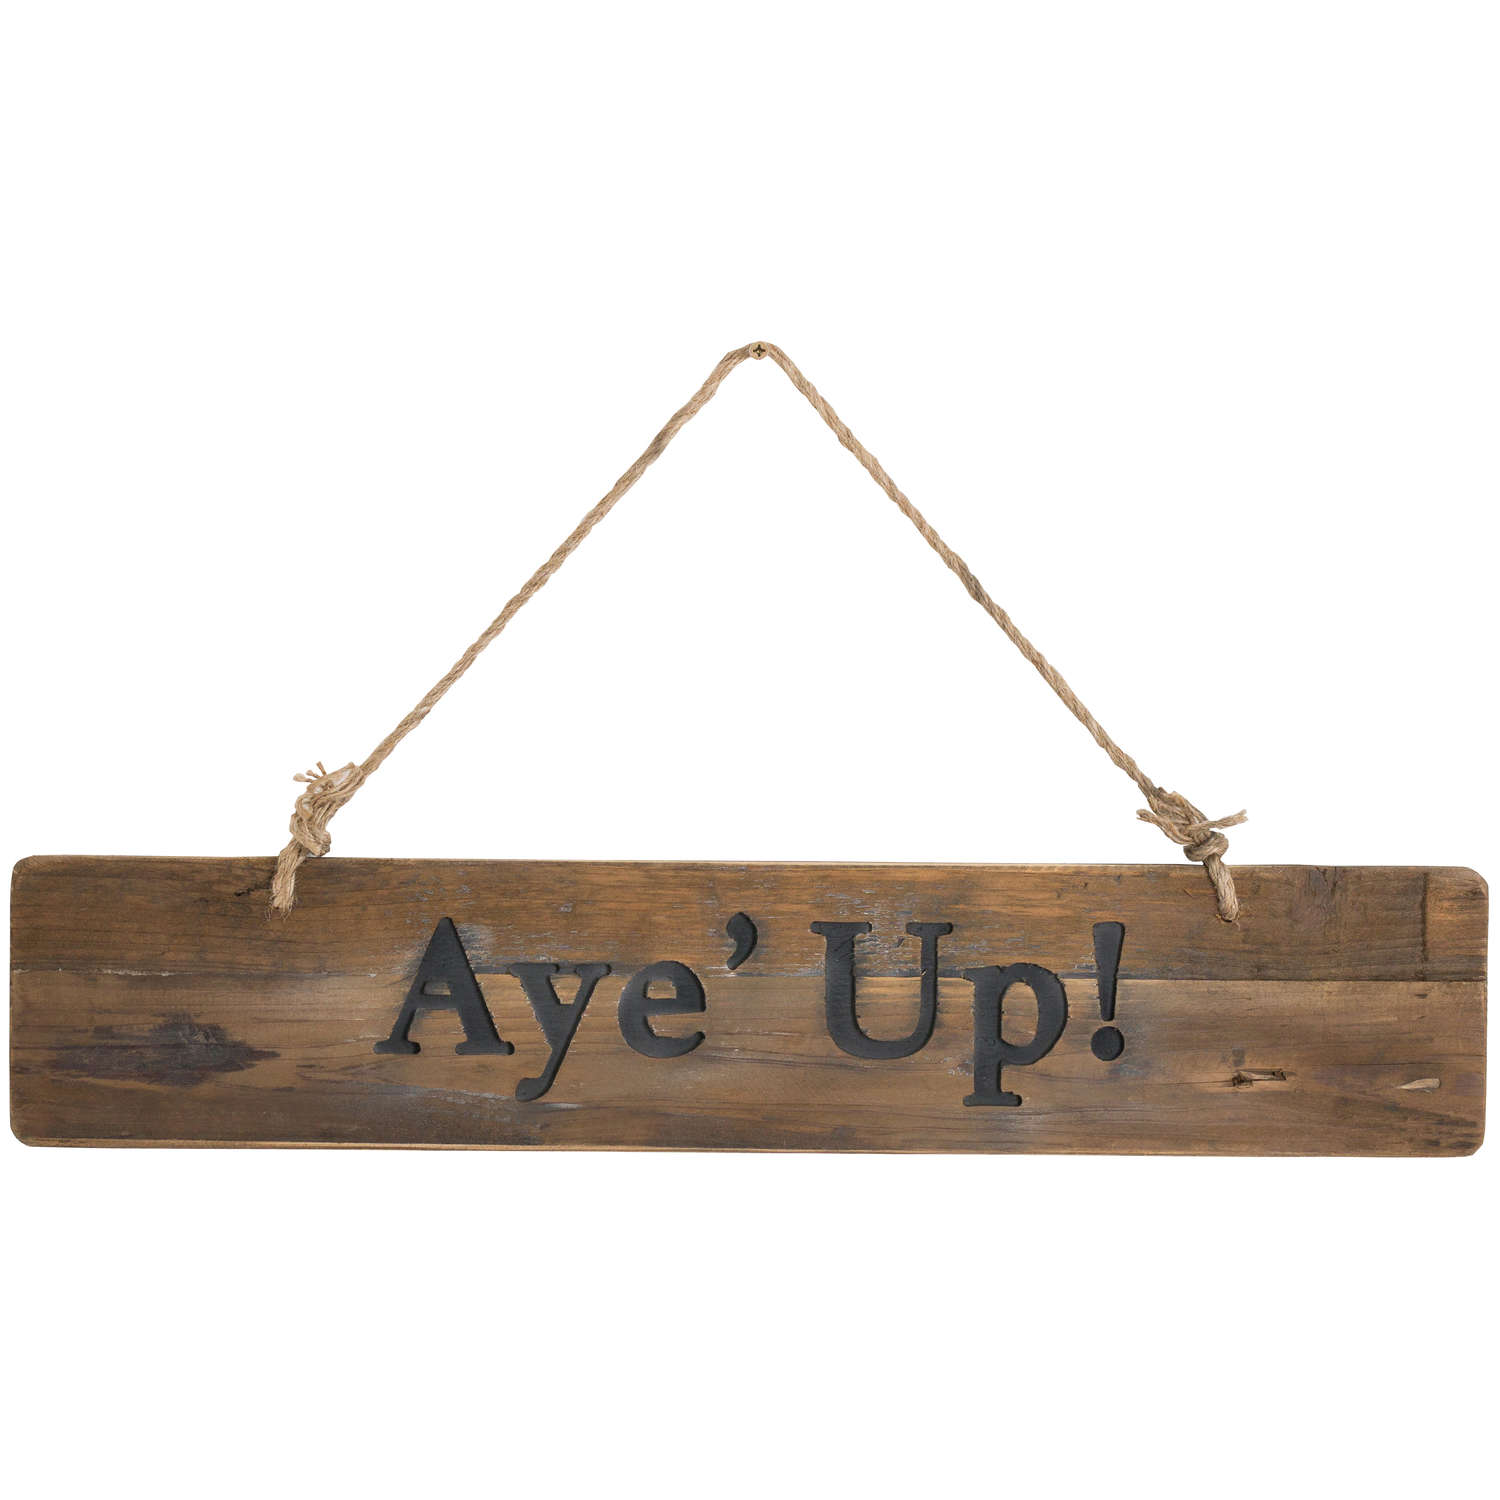 Aye’ Up Rustic Wooden Message Plaque